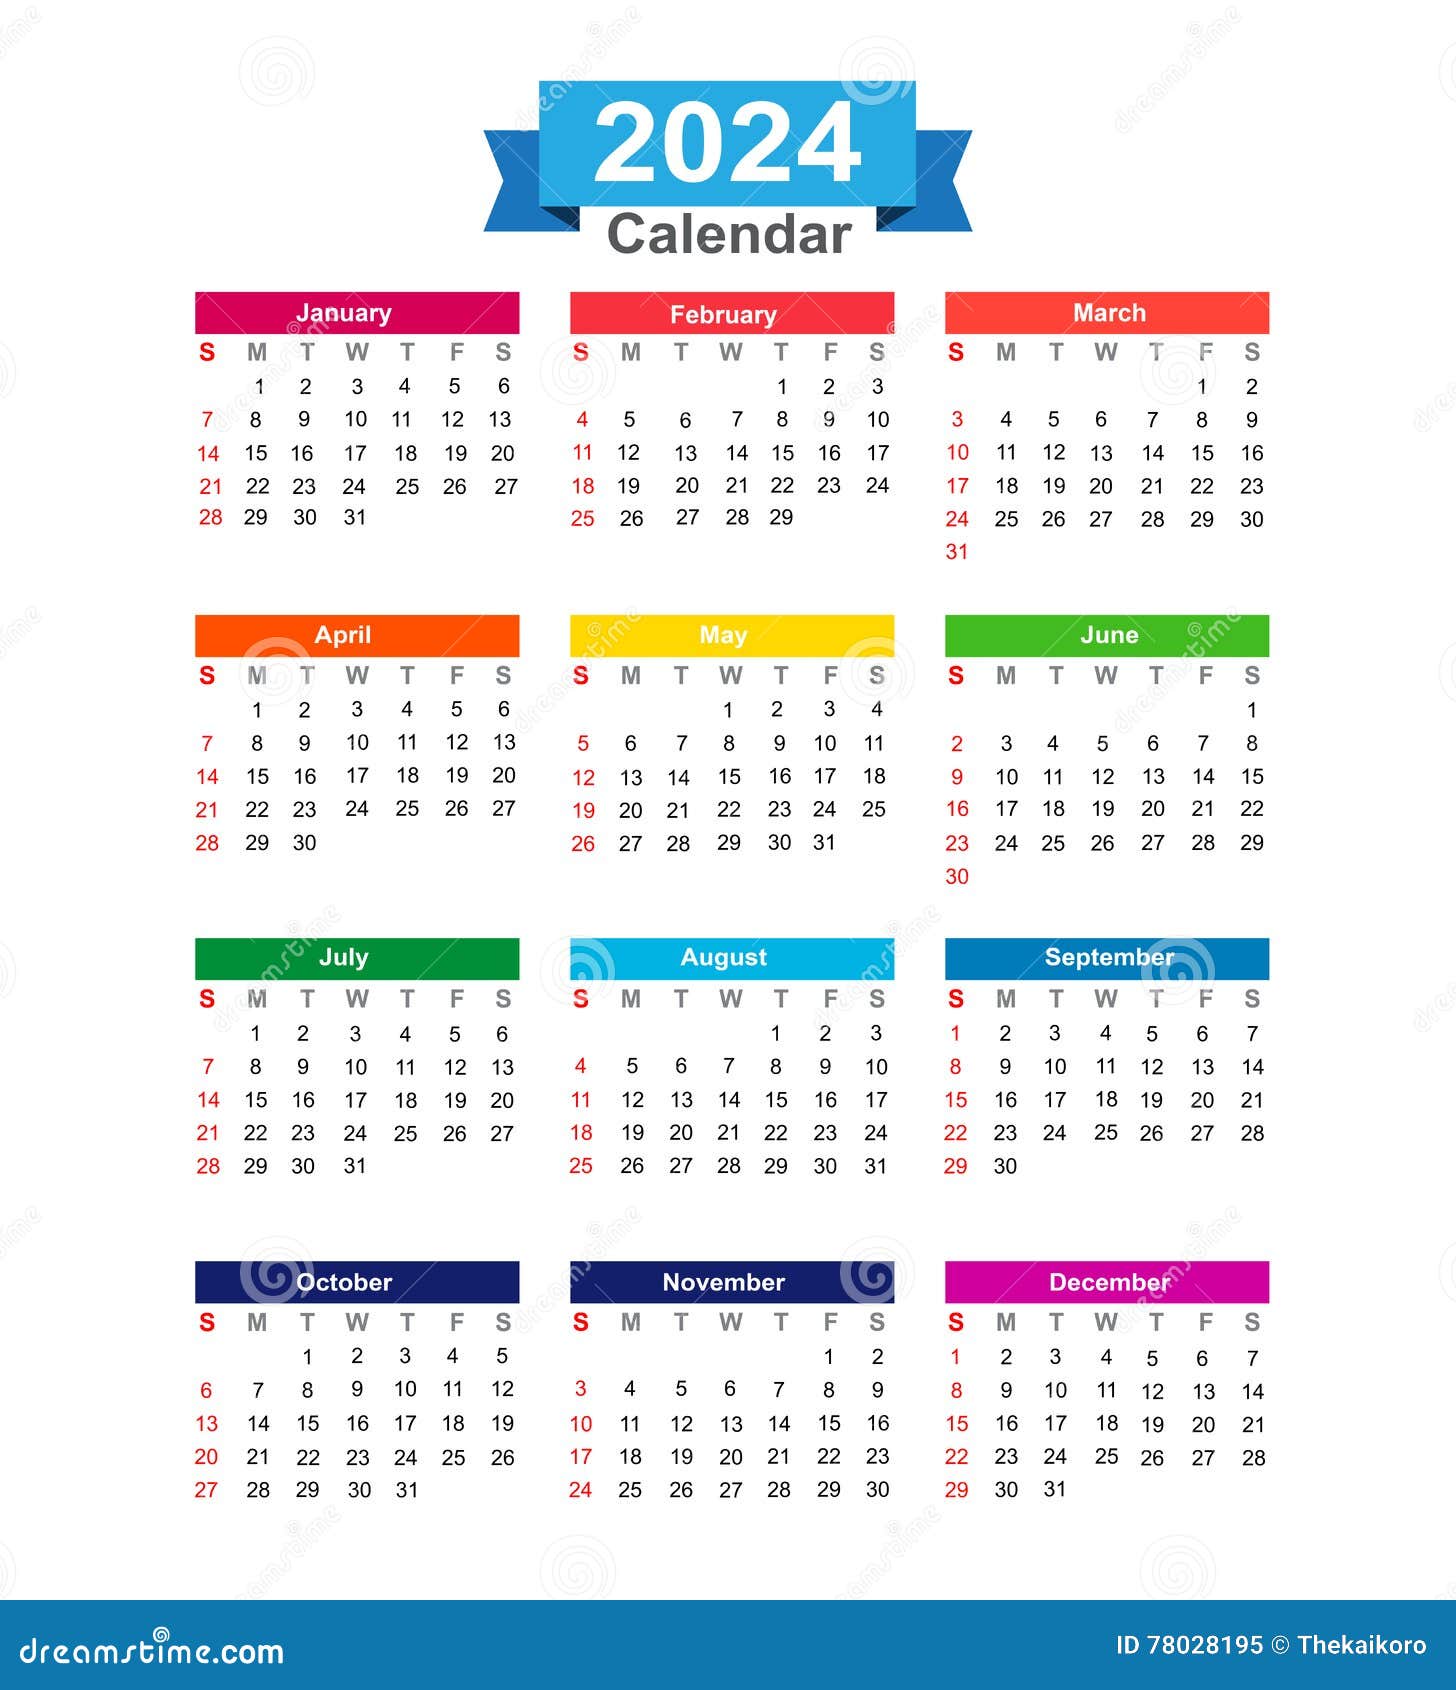 Calendario Laboral Del 2024 IMAGESEE